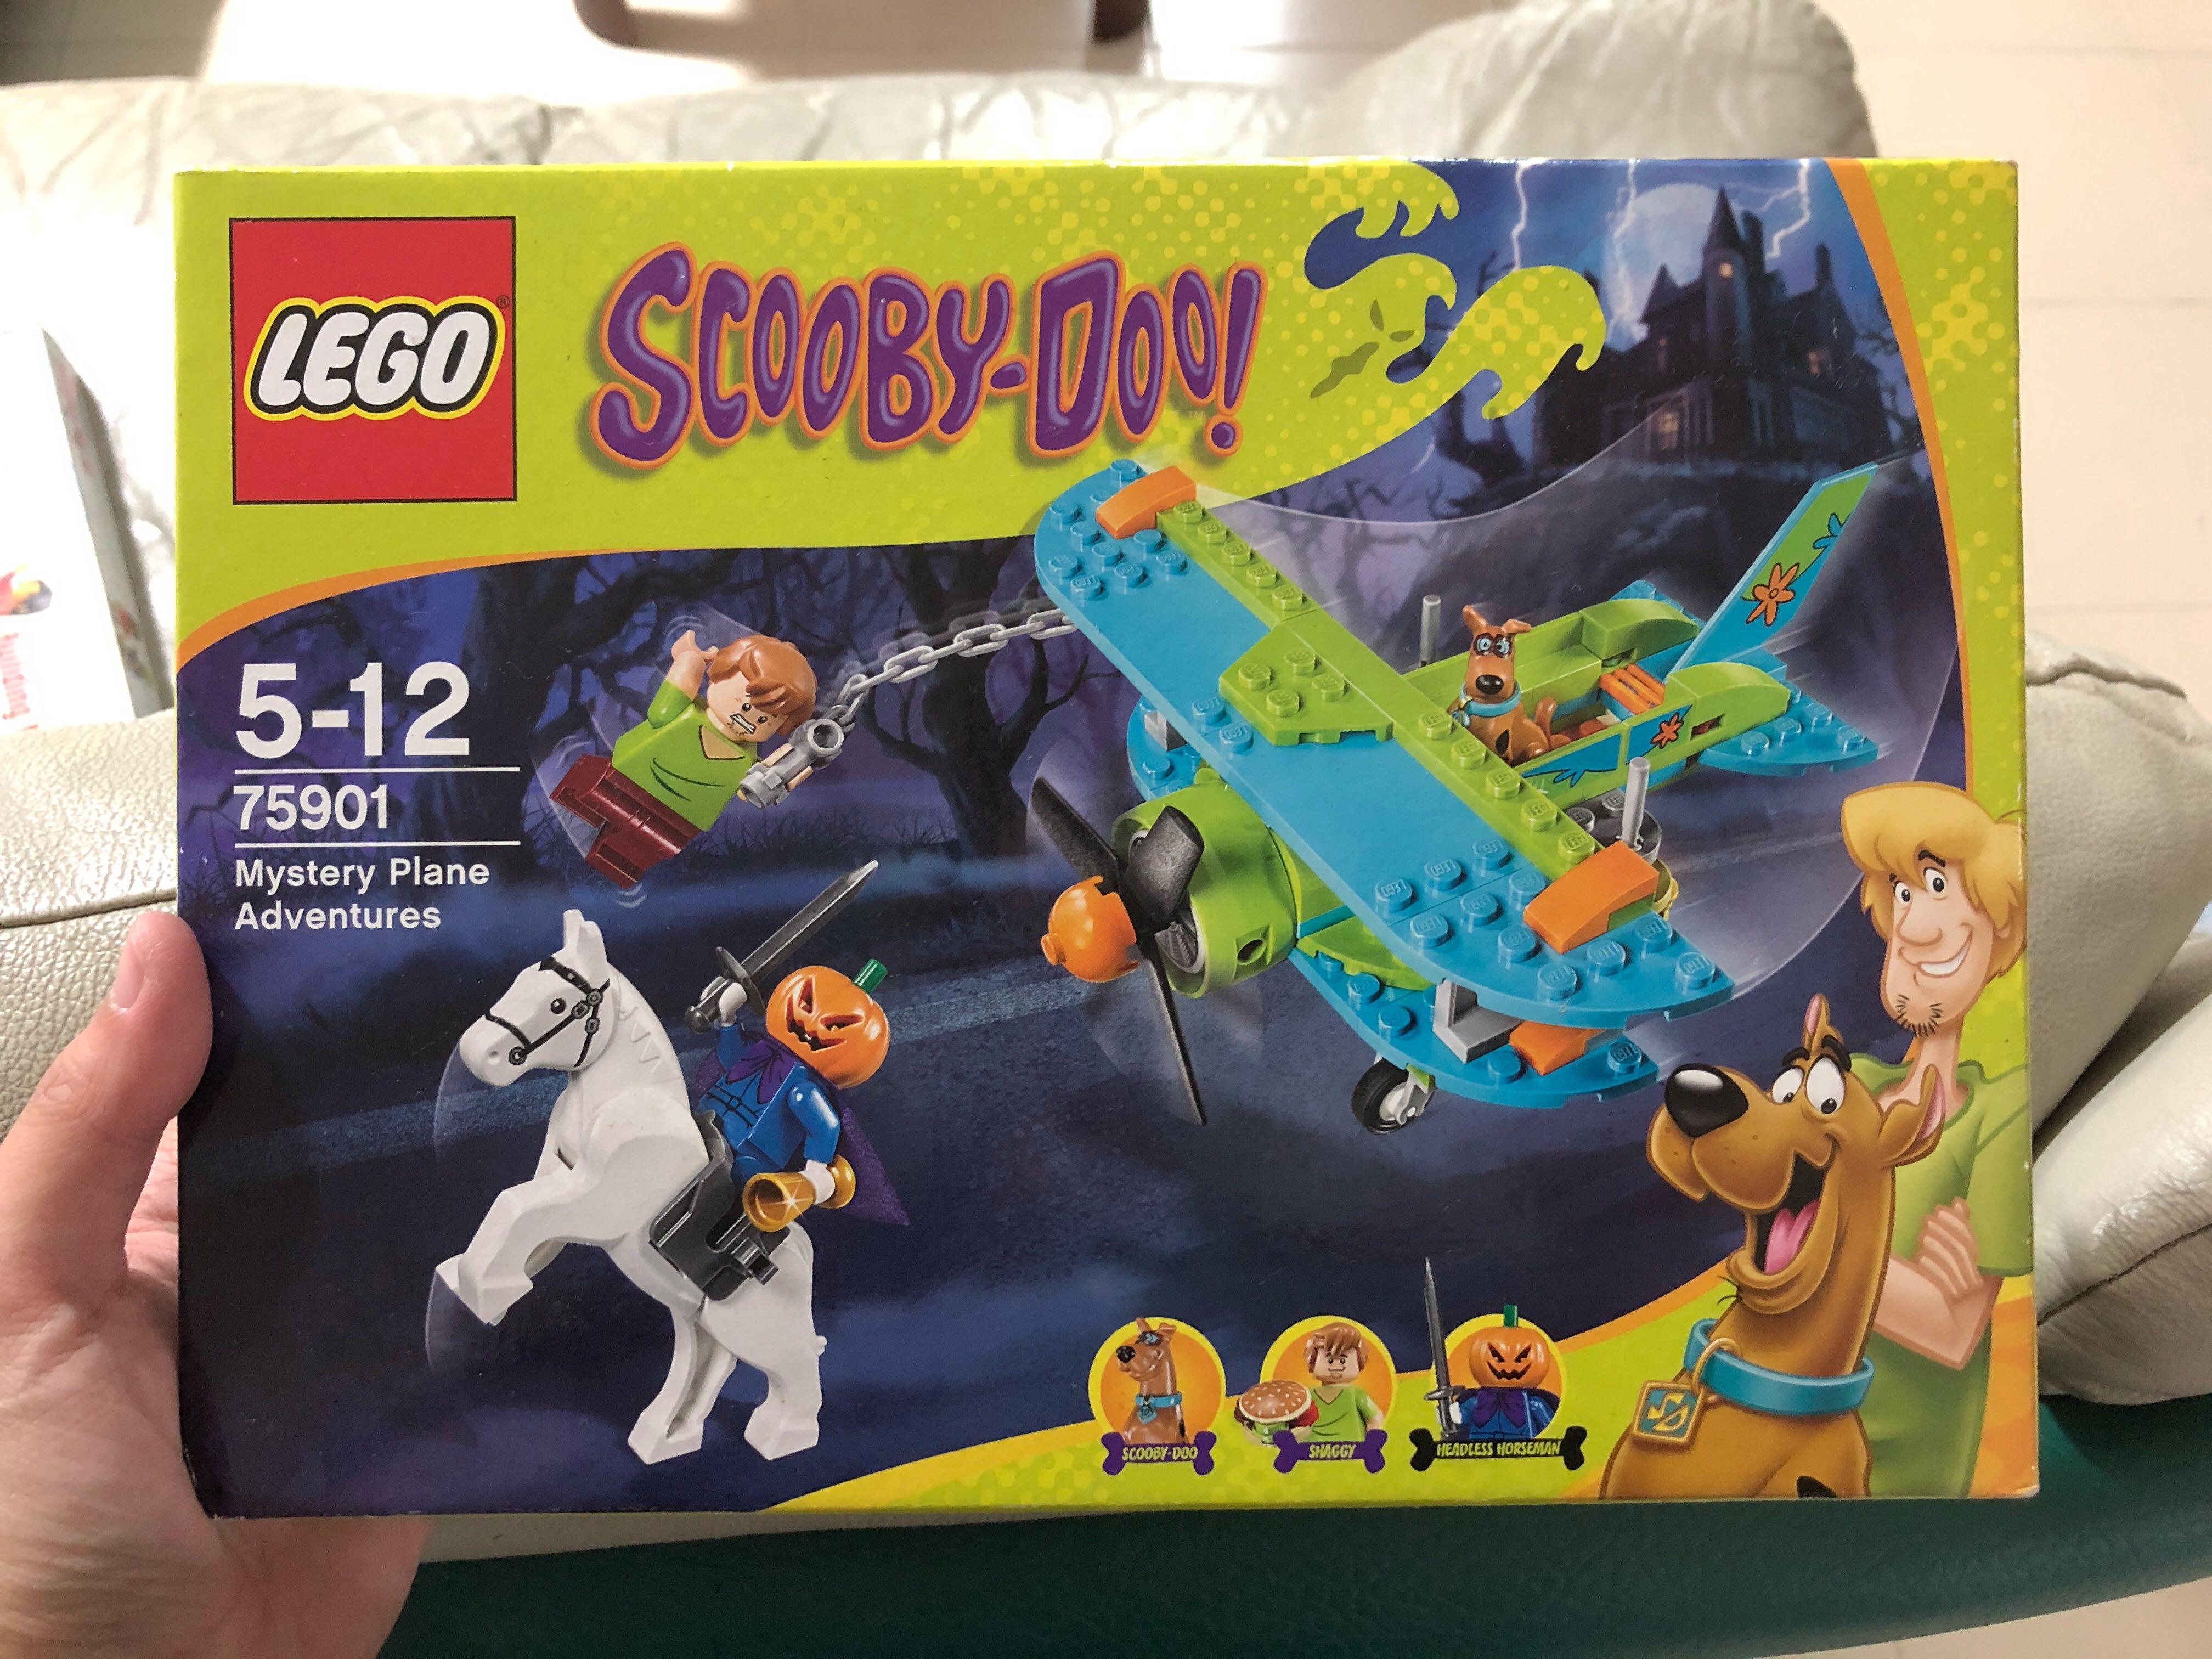 Sealed Unopened New Lego 75901 Scooby Doo Mystery Plane Adventures 